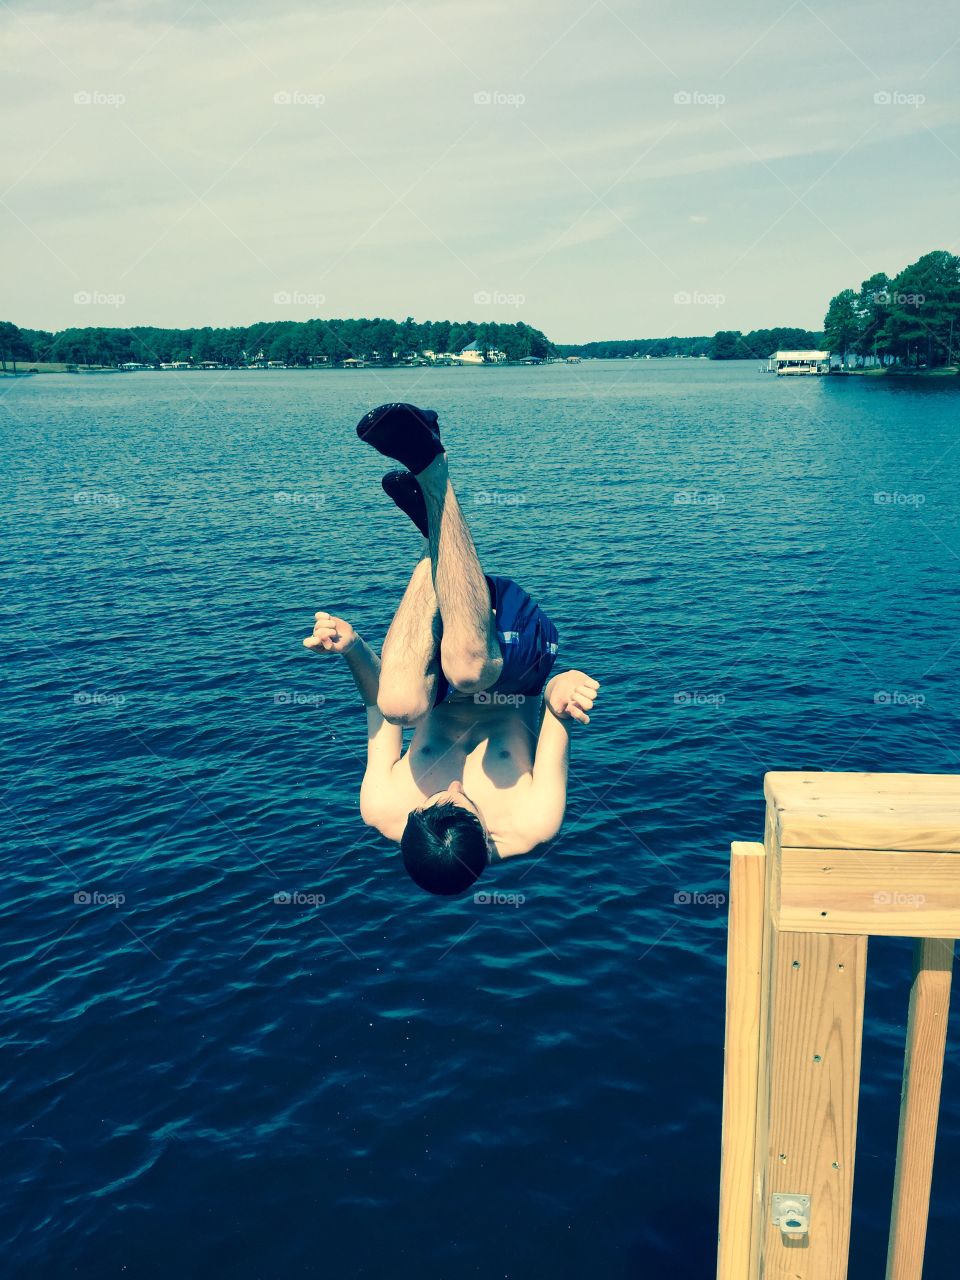 Summer lake jumping teenager flip upside down